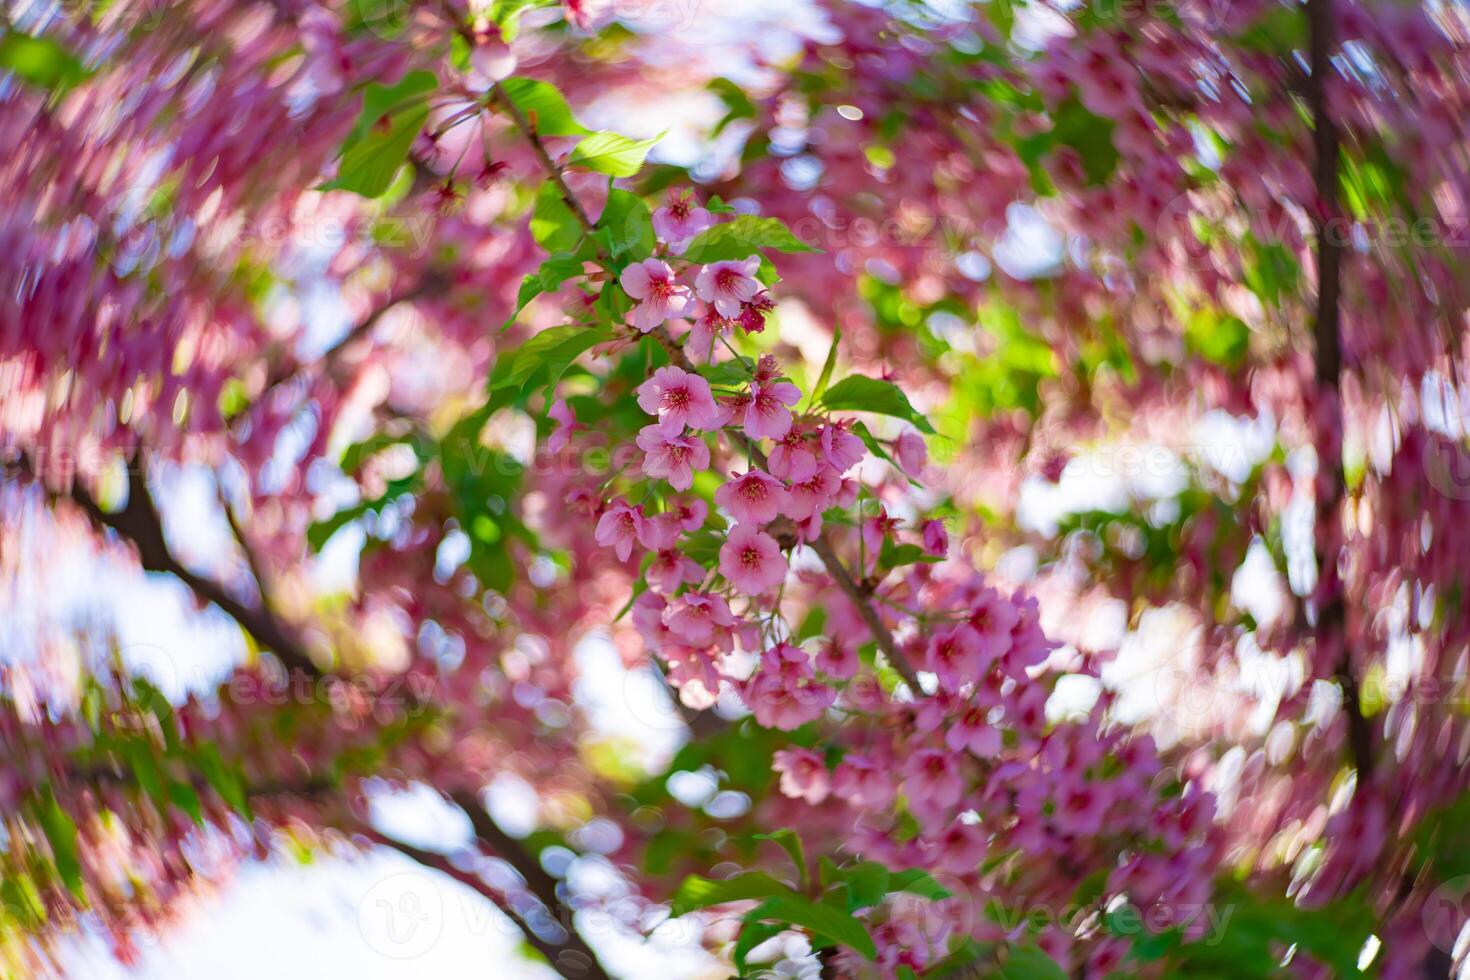 Kawazu cherry blossoms swirly blur in spring season close up photo